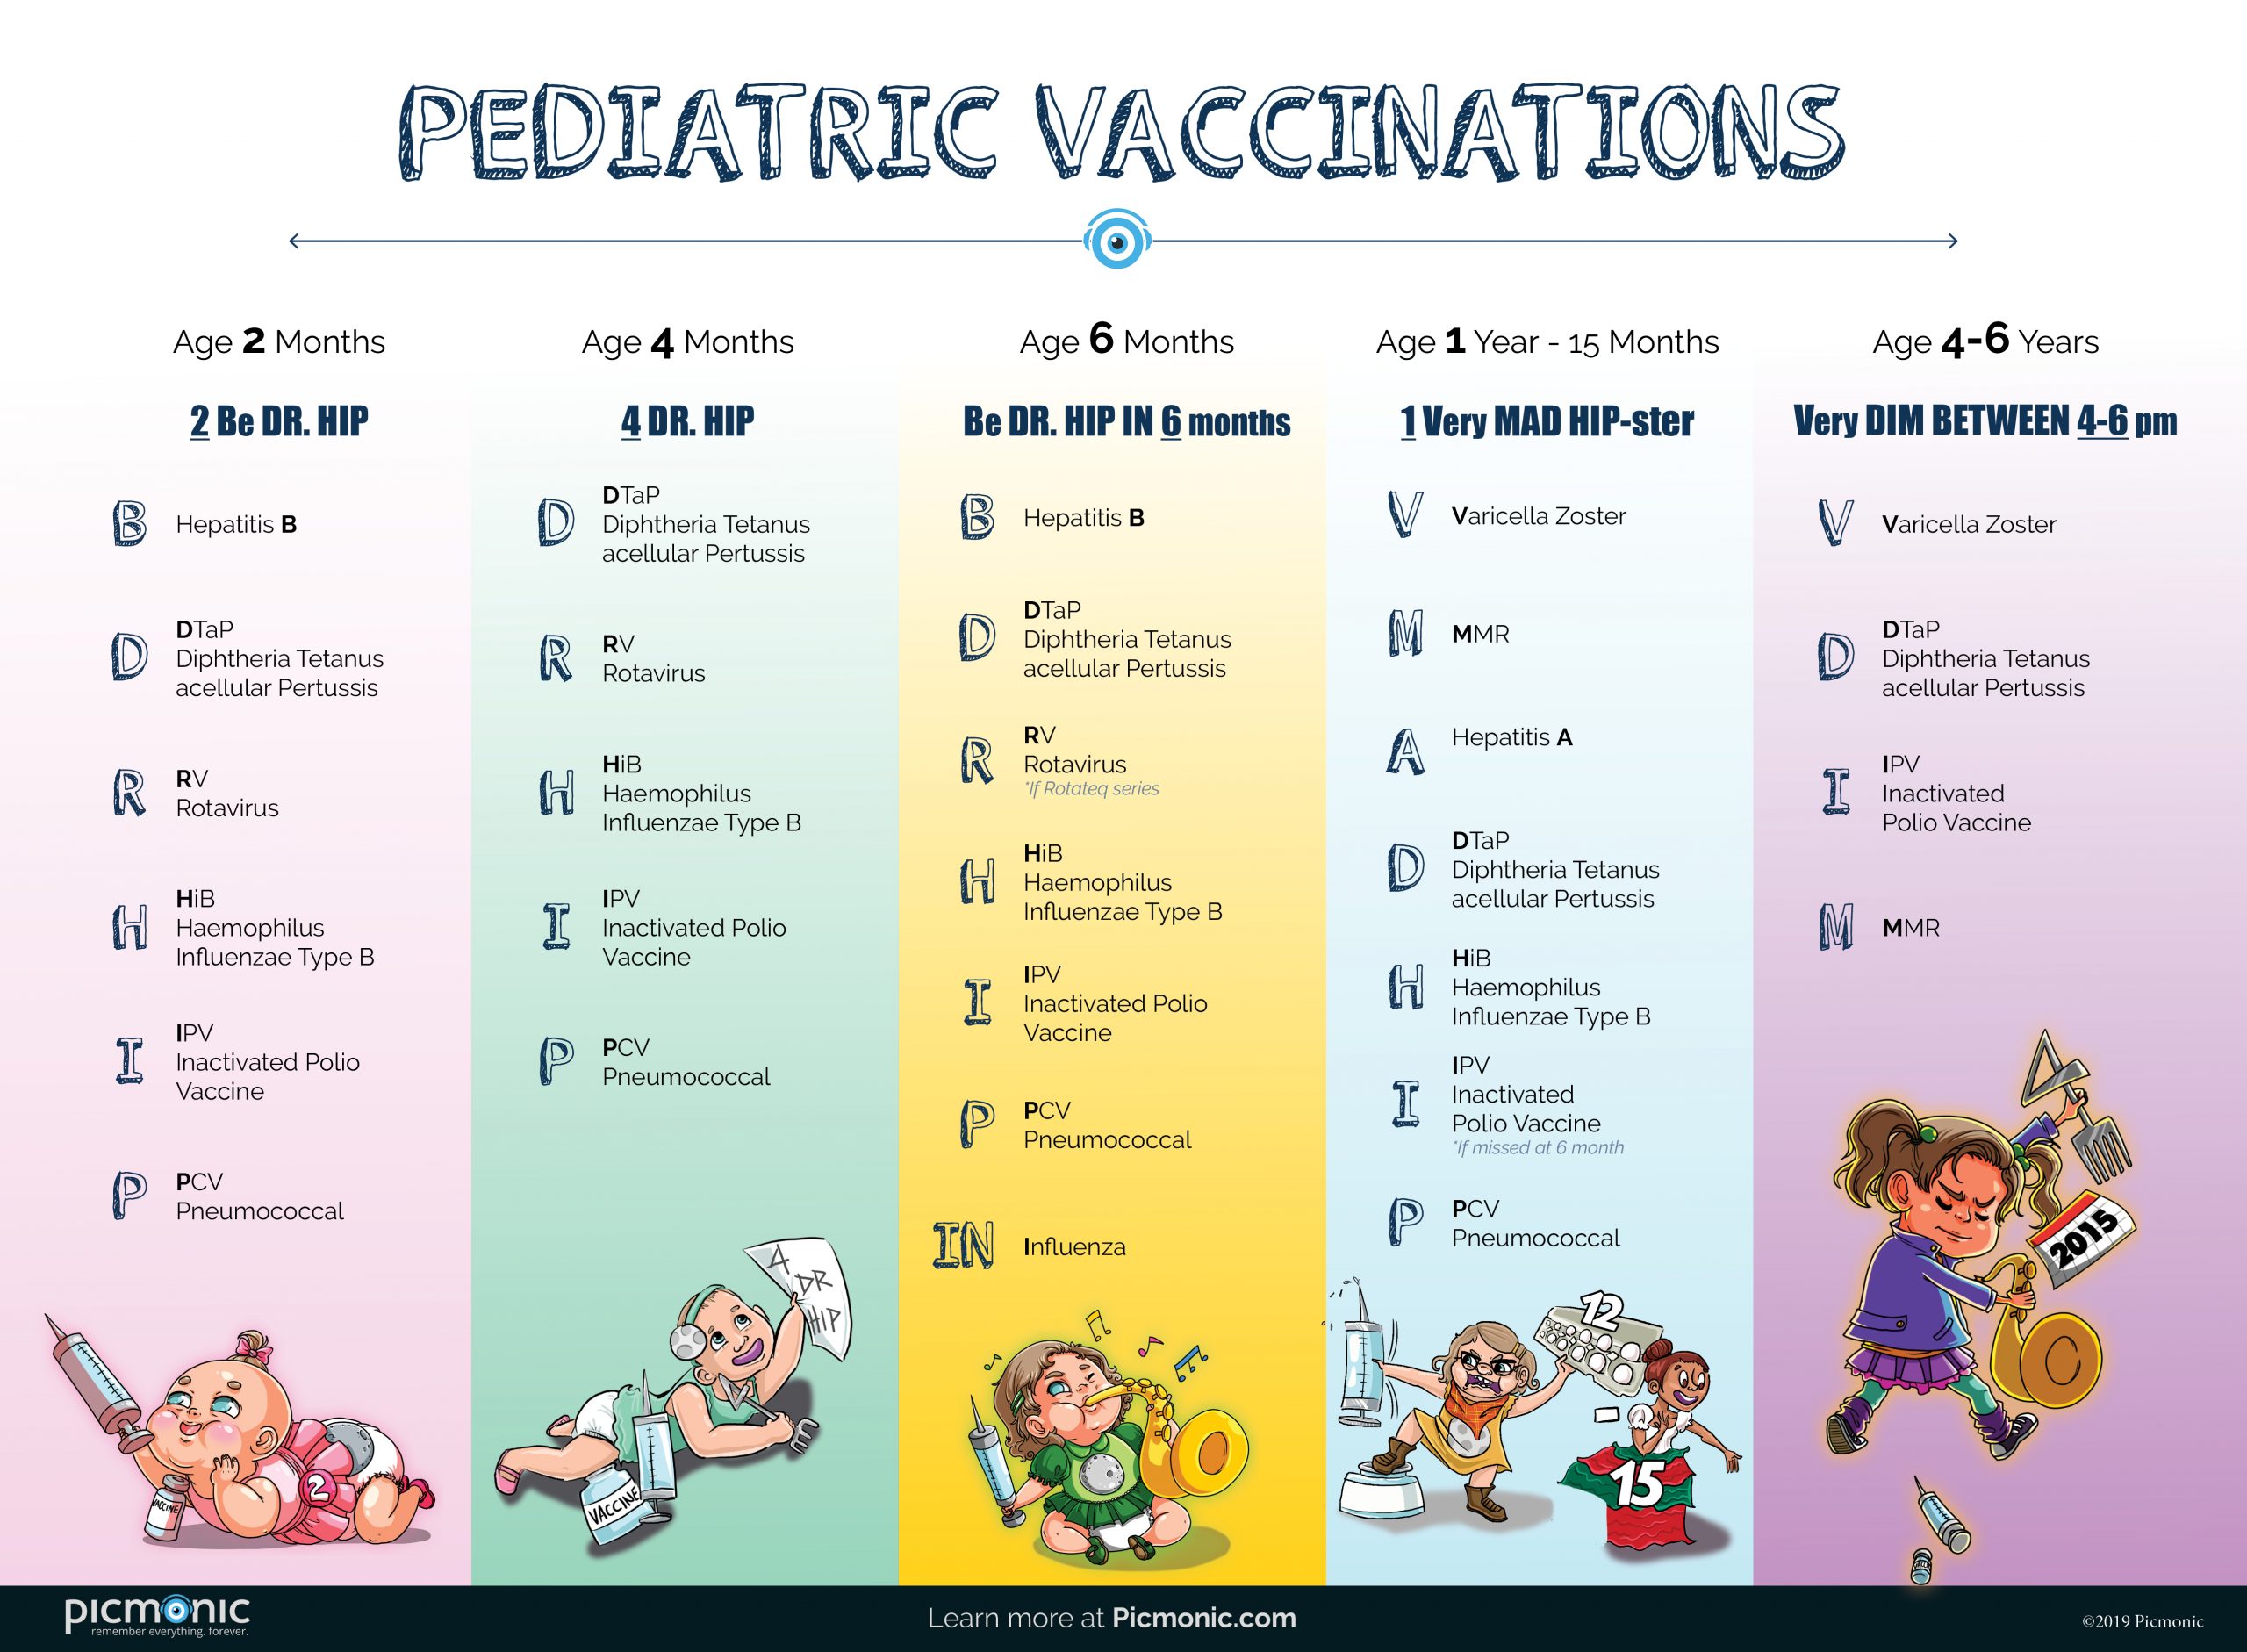 What is the pediatric immunization code?